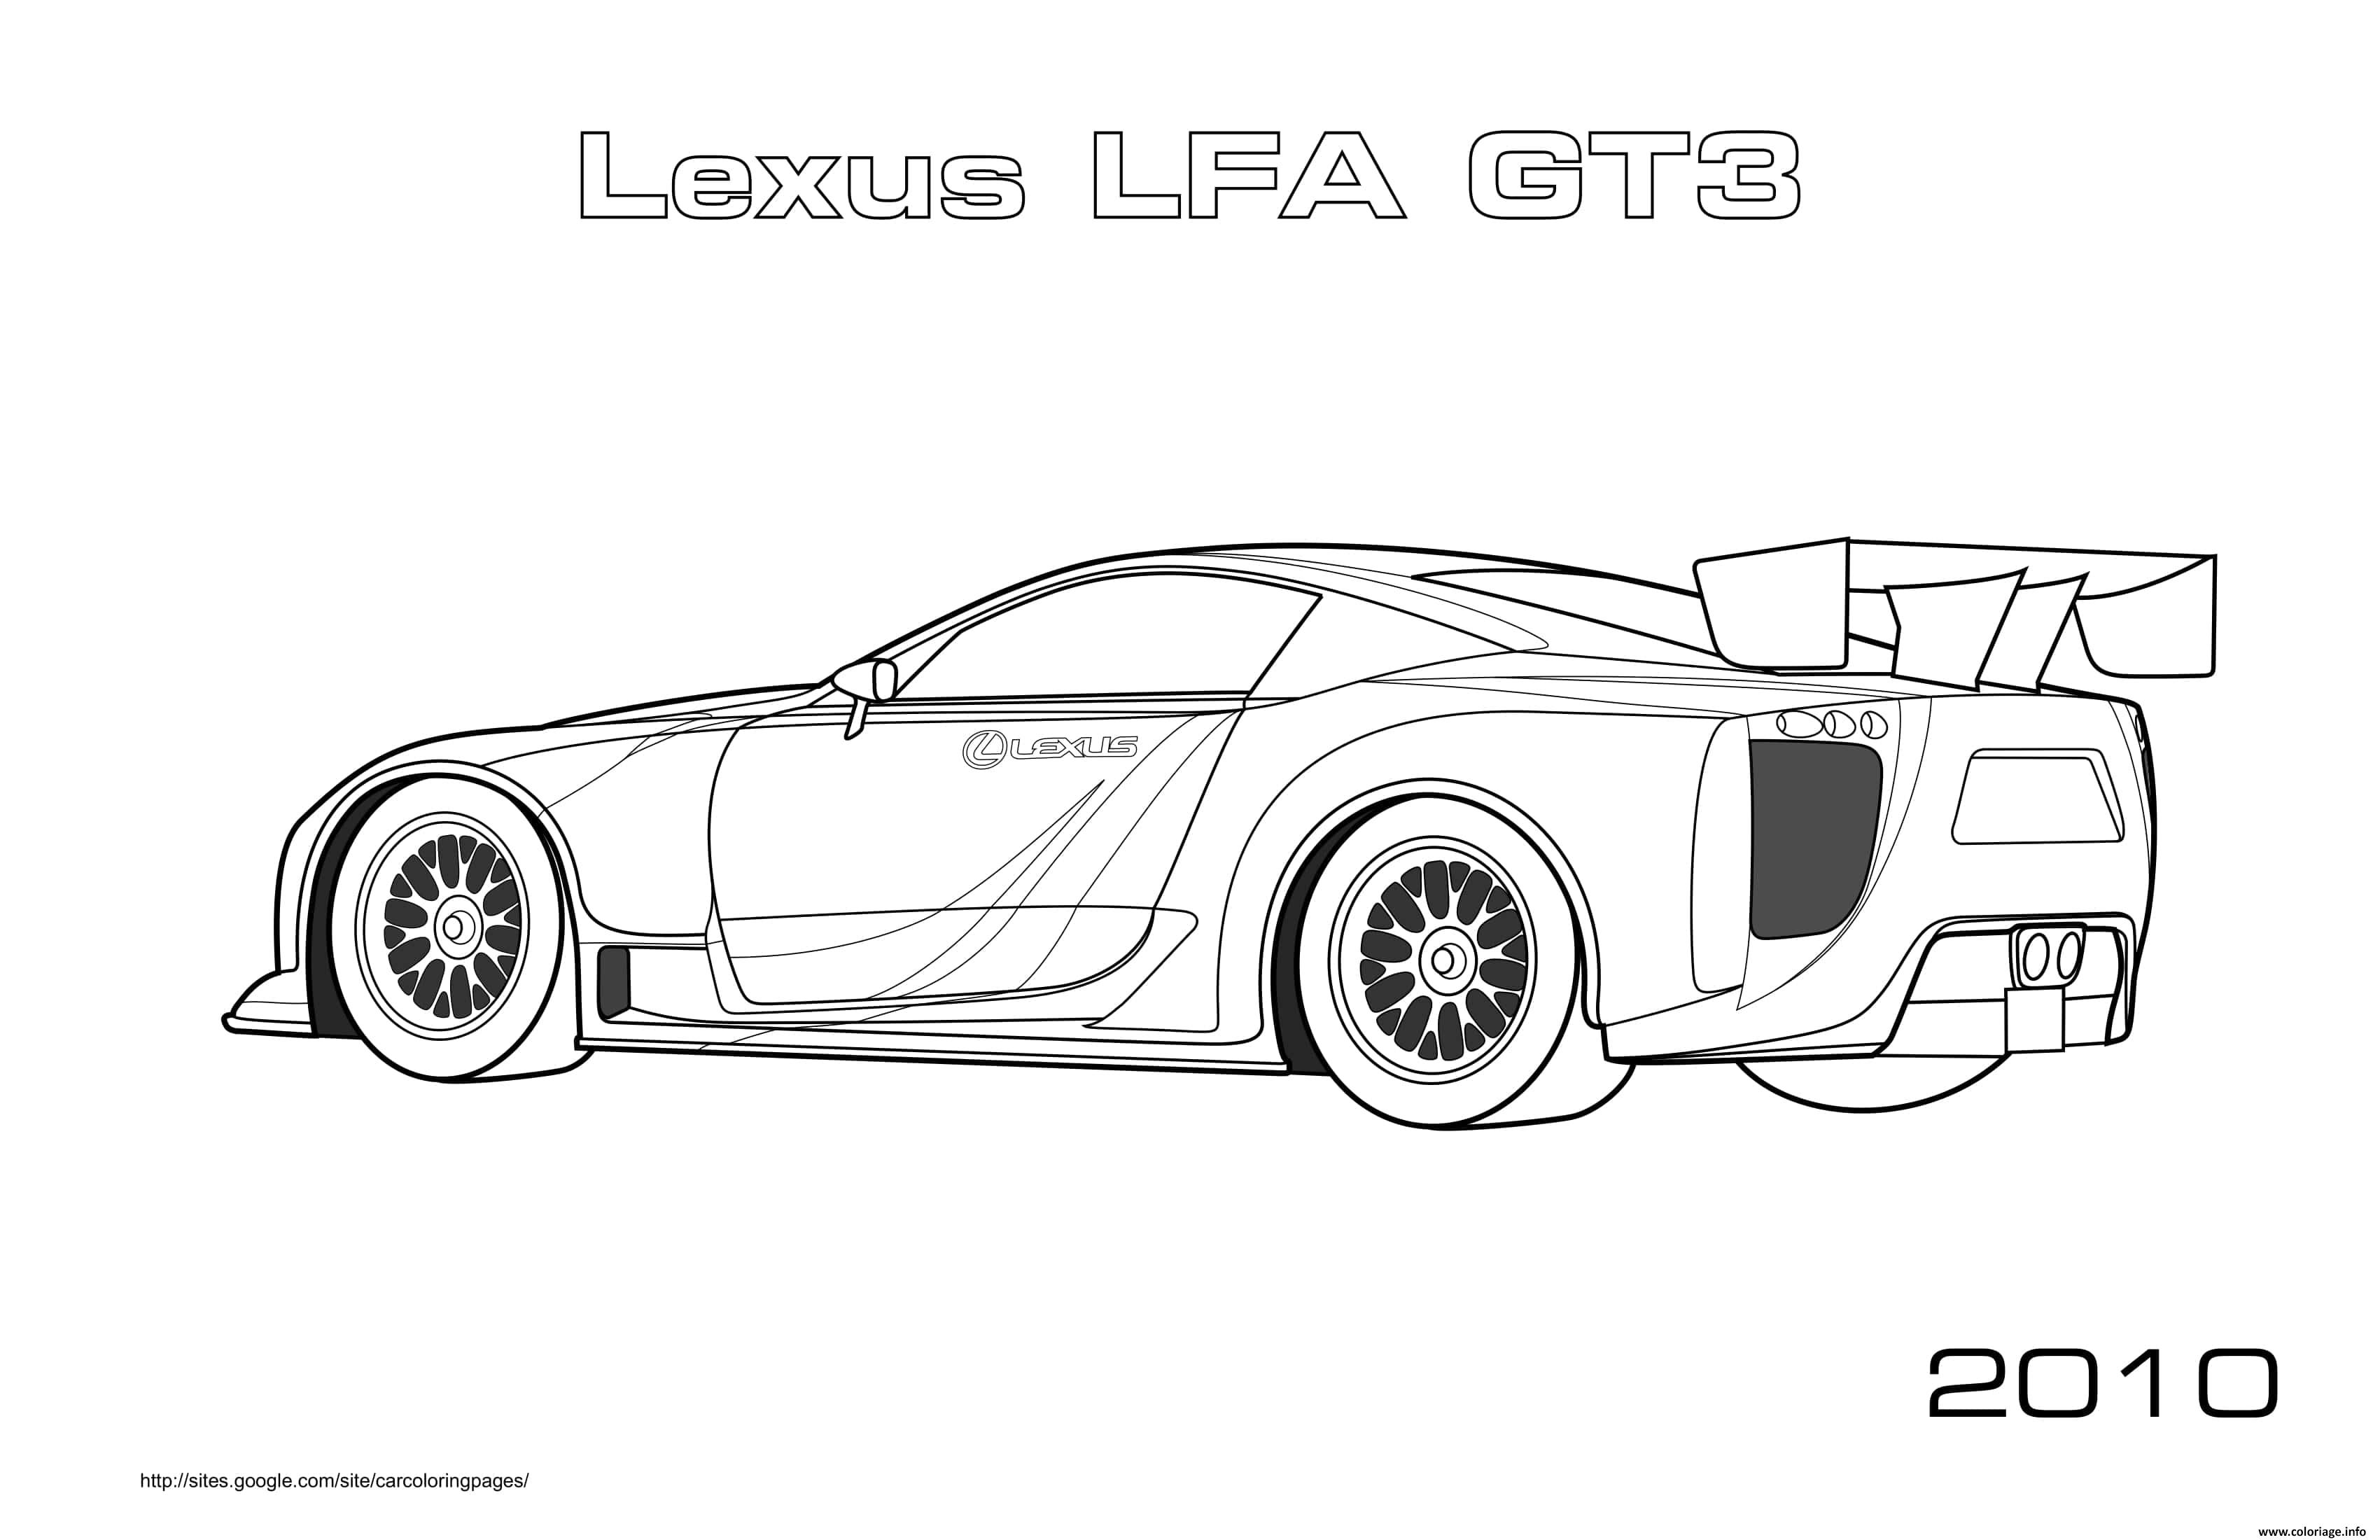 Dessin Lexus Lfa Gt3 2010 Coloriage Gratuit à Imprimer